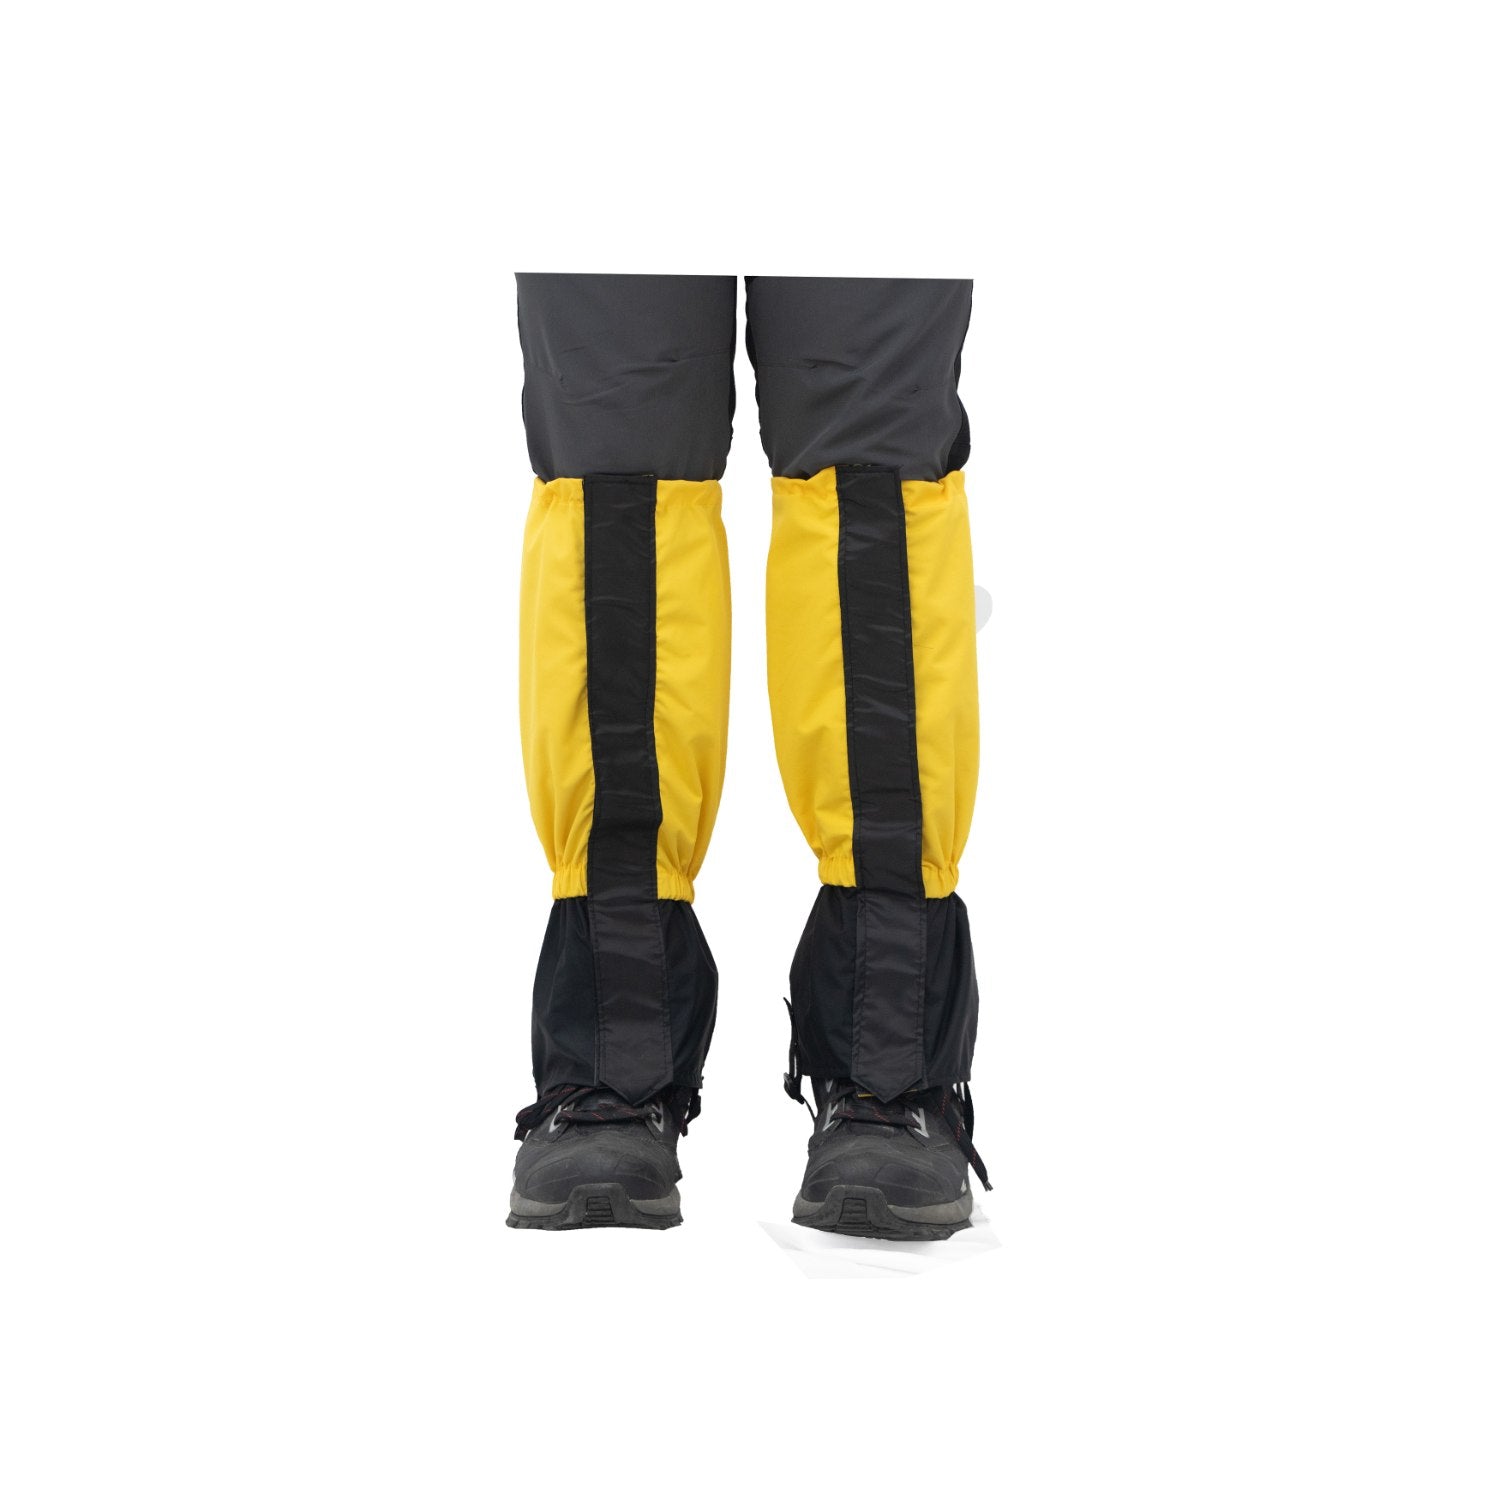 Buy Gokyo Kaza Shoe Gaiters | Snow Gaiters at Gokyo Outdoor Clothing & Gear